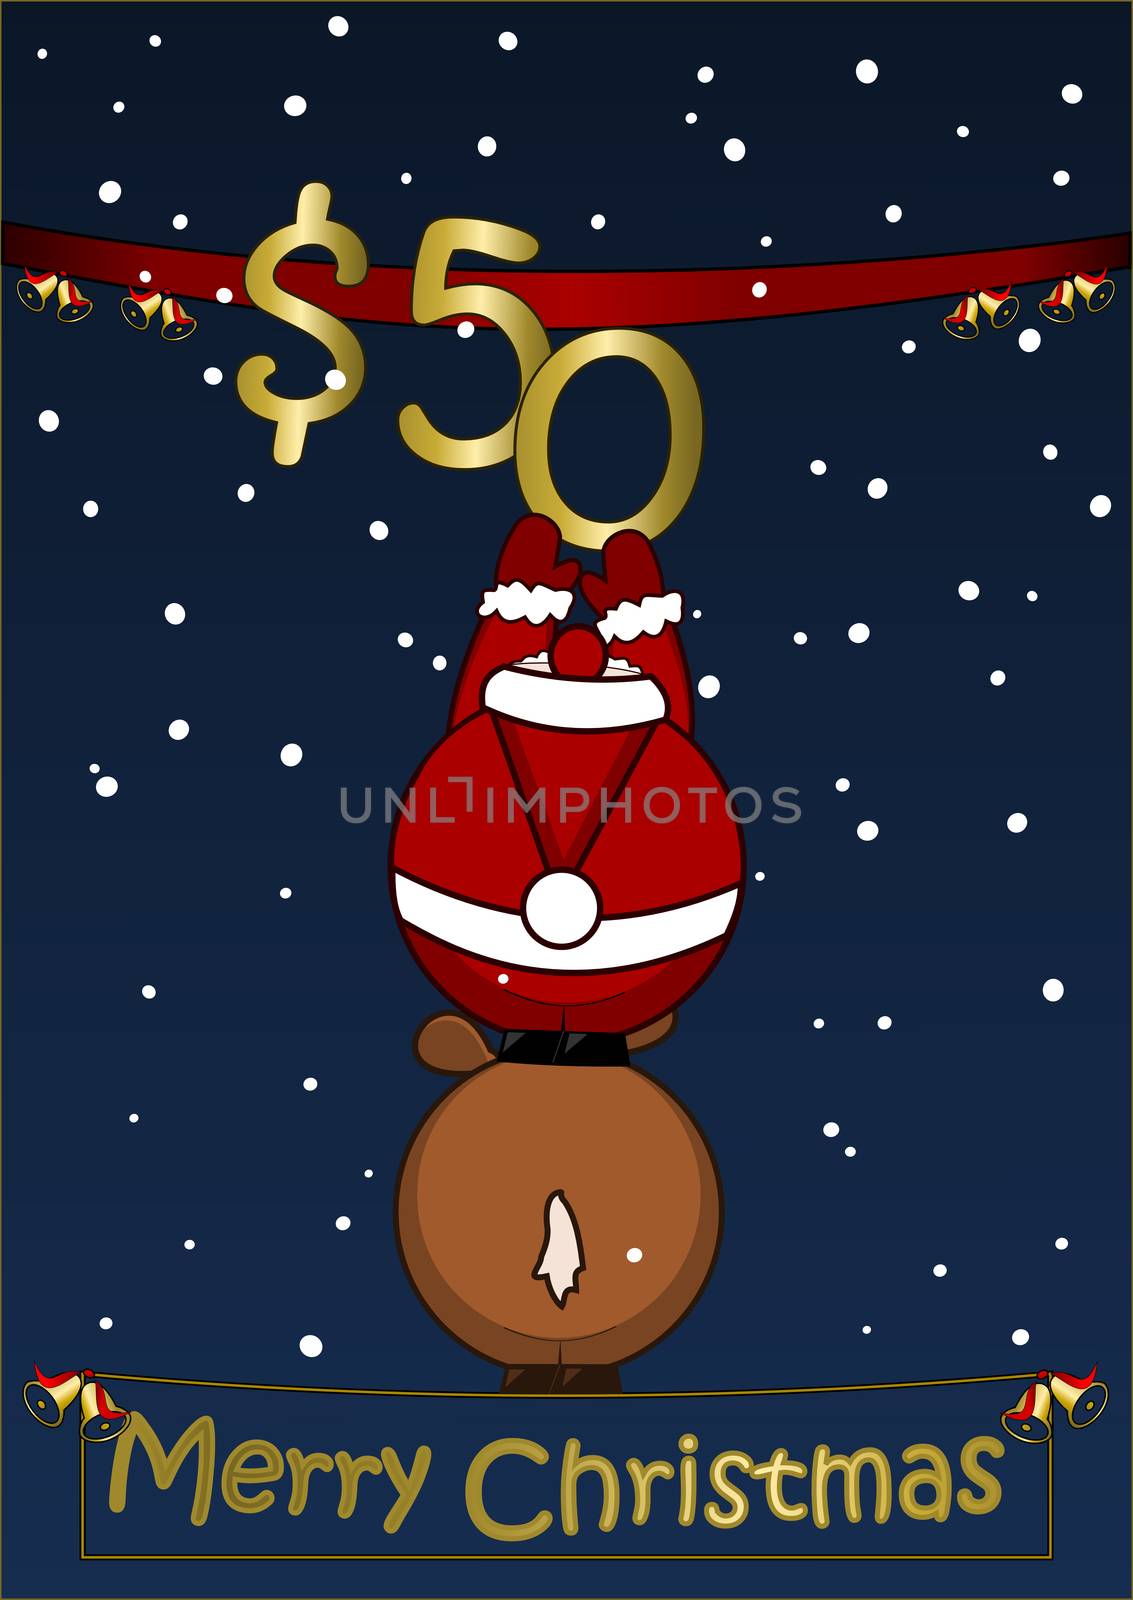 Merry Christmas - 50 Dollar- gift certificate 